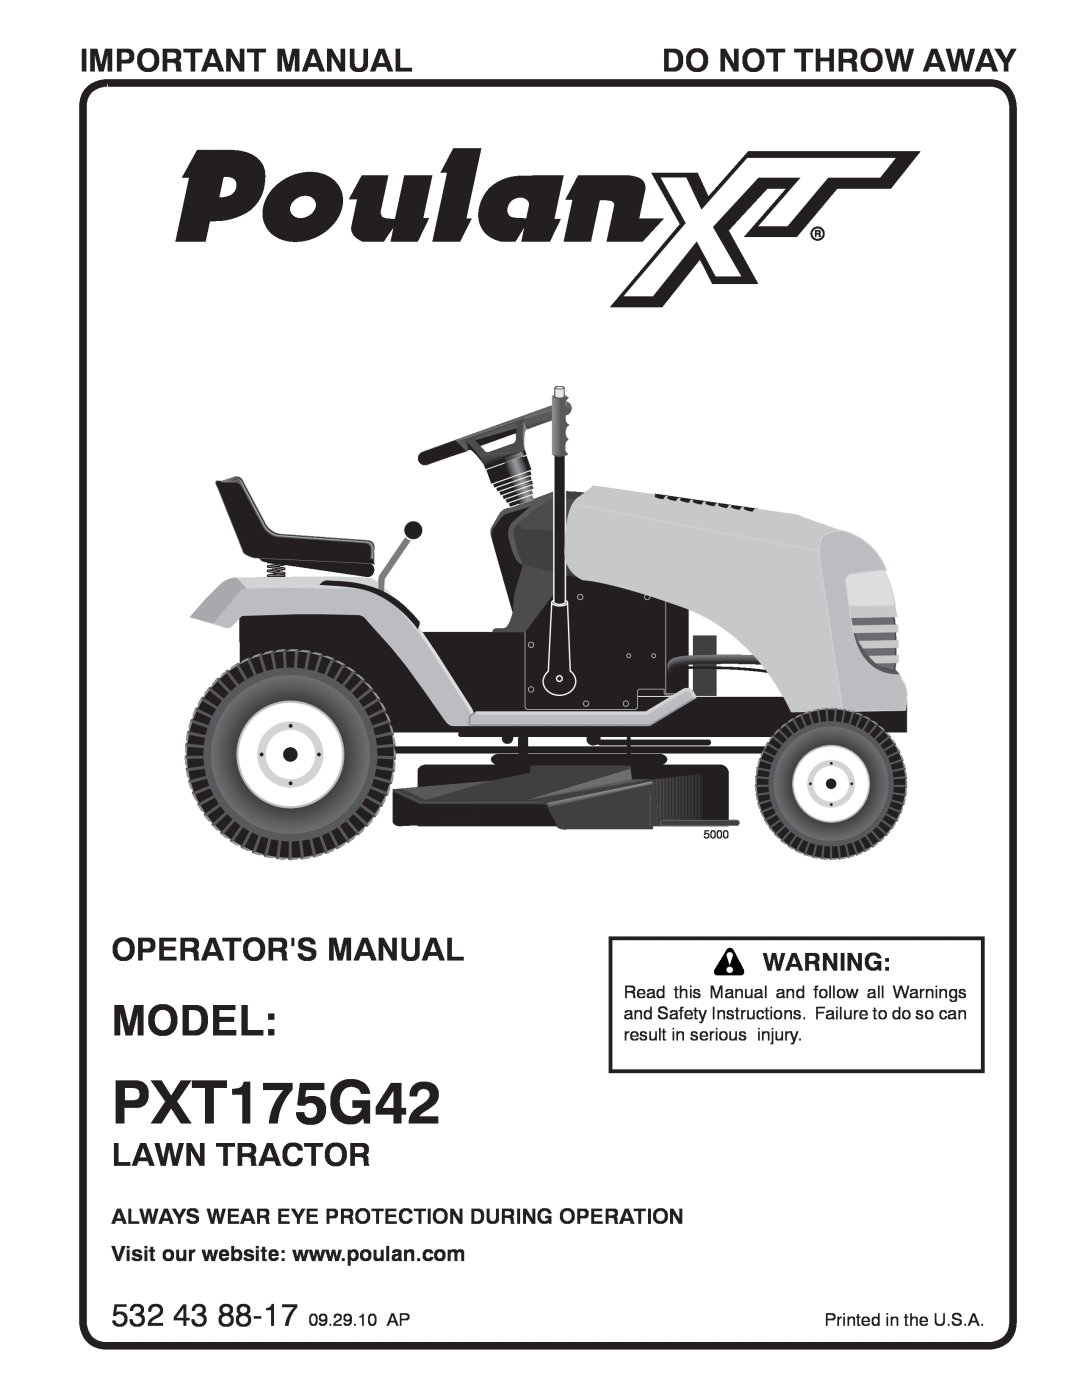 Poulan 96016002400 manual Model, Important Manual, Do Not Throw Away, Operators Manual, Lawn Tractor, PXT175G42, 5000 